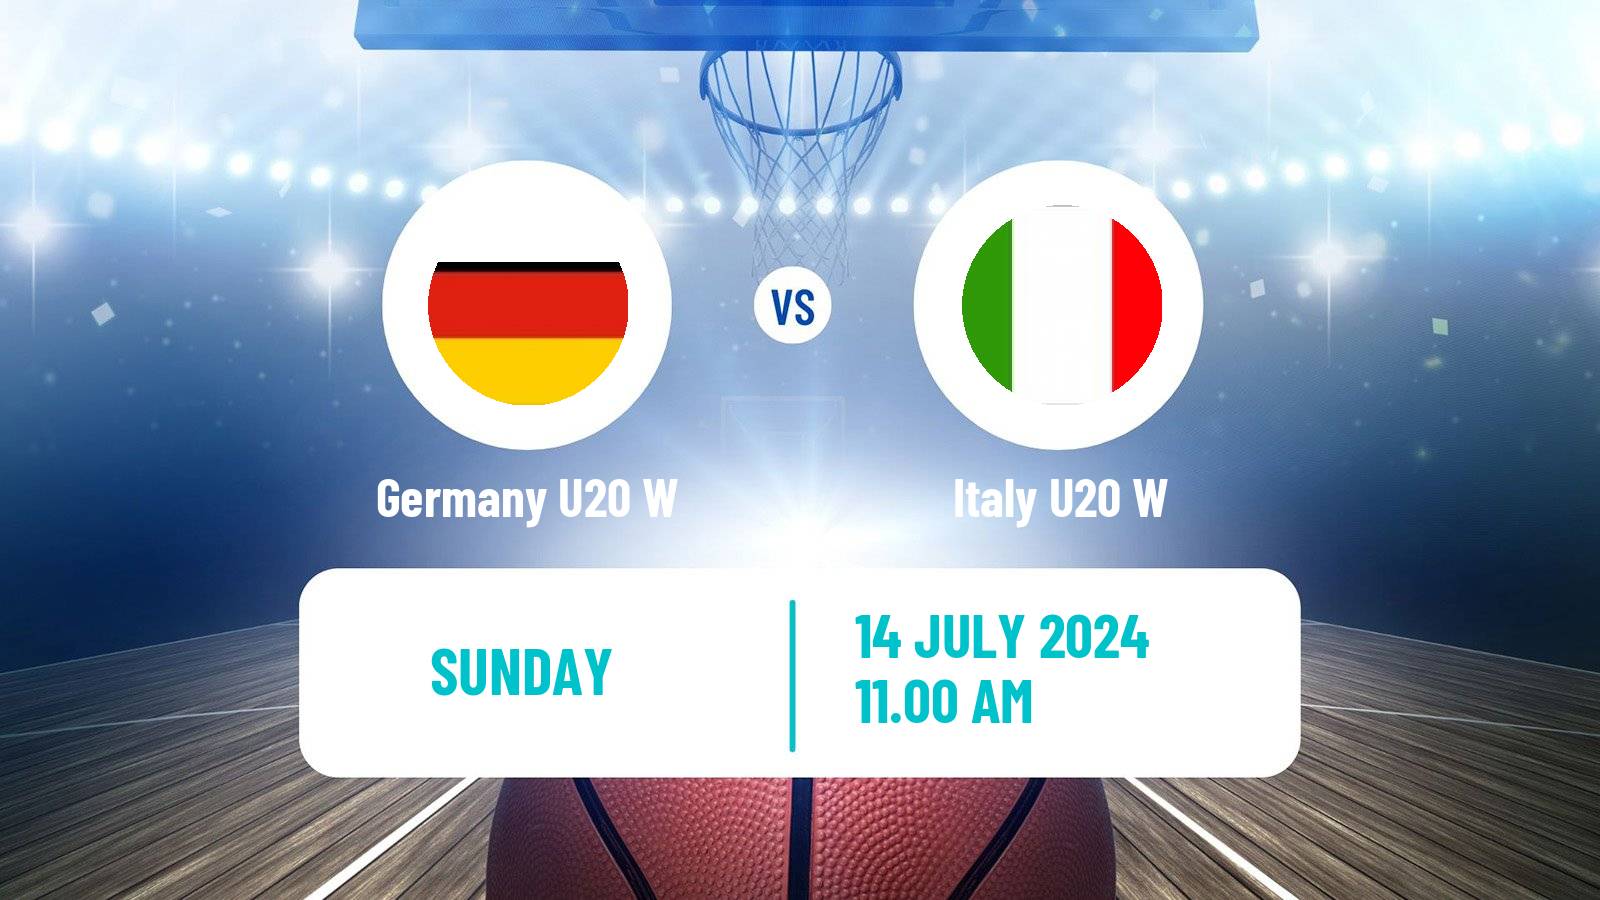 Basketball European Championship U20 Basketball Women Germany U20 W - Italy U20 W